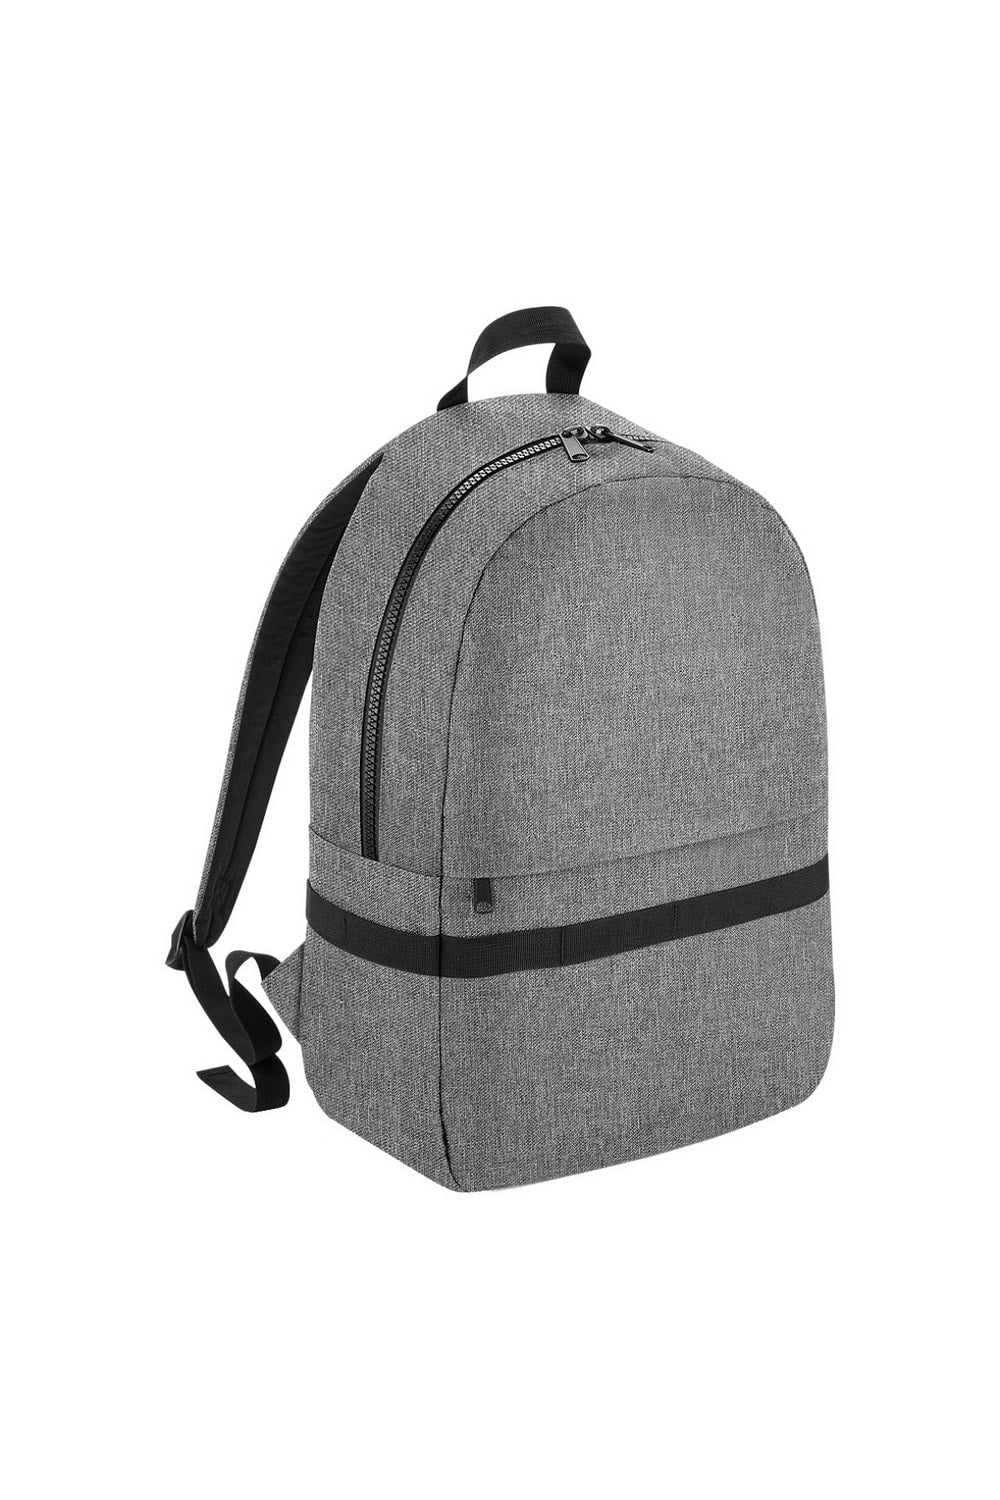 Adults Unisex Modulr 5.2 Gallon Backpack - Gray Marl